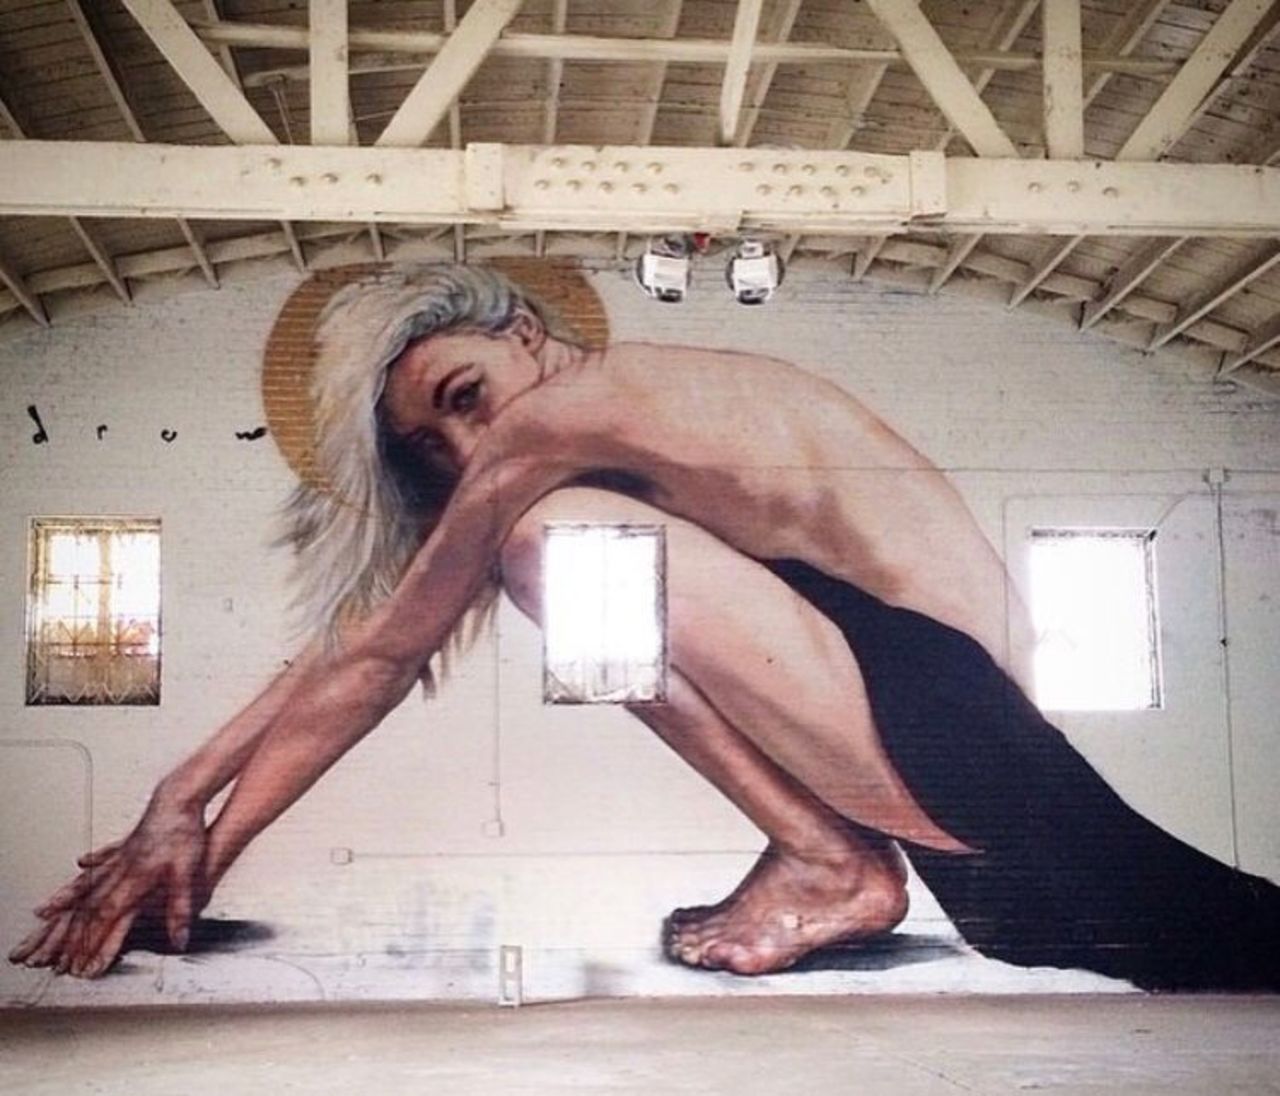 New work by Drew Merritt #streetart #mural #graffiti #art https://t.co/qludf3QCFp